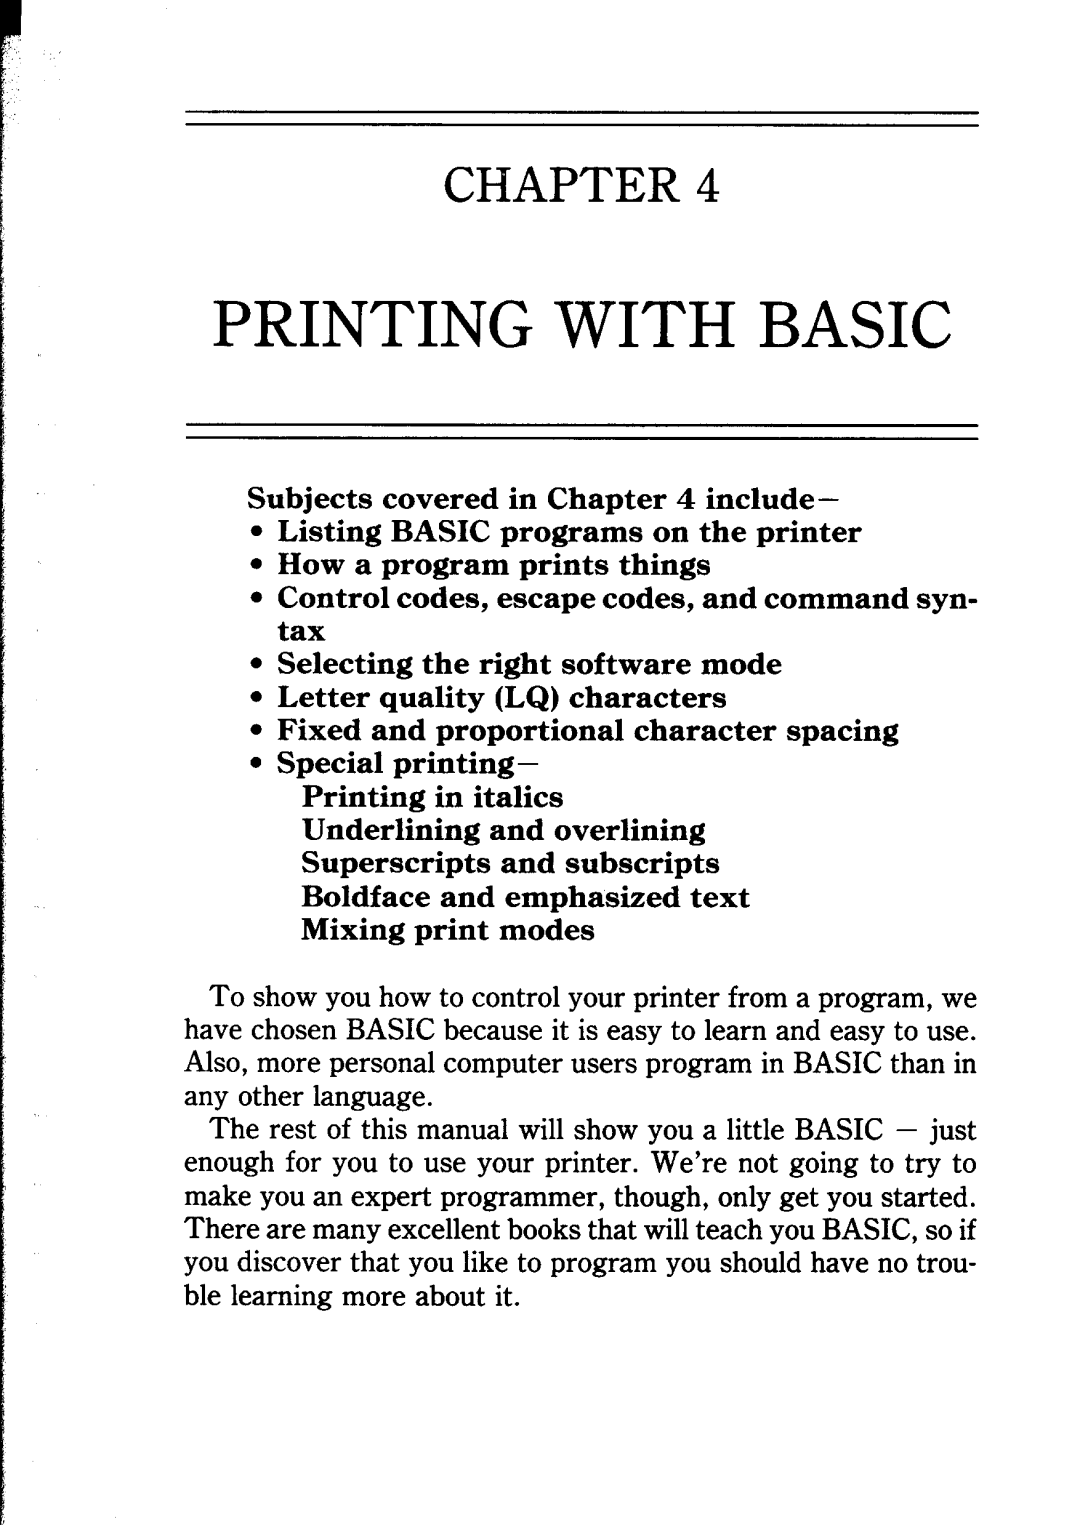 Star Micronics NB24-10/15 user manual Printing With Basic, Chapter 